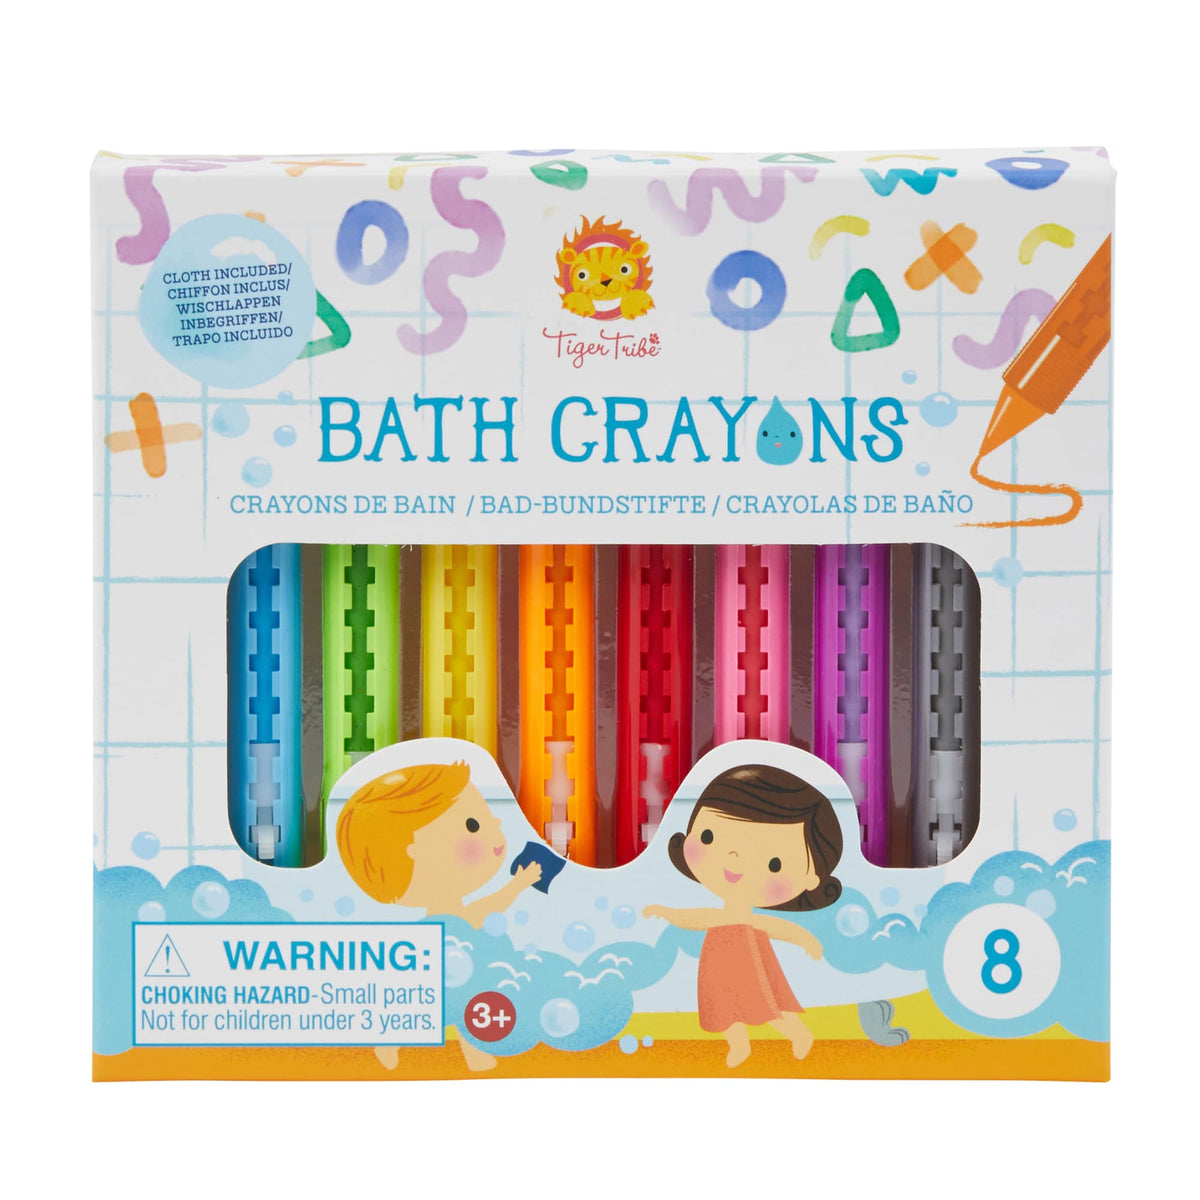 Bath Crayons Cover